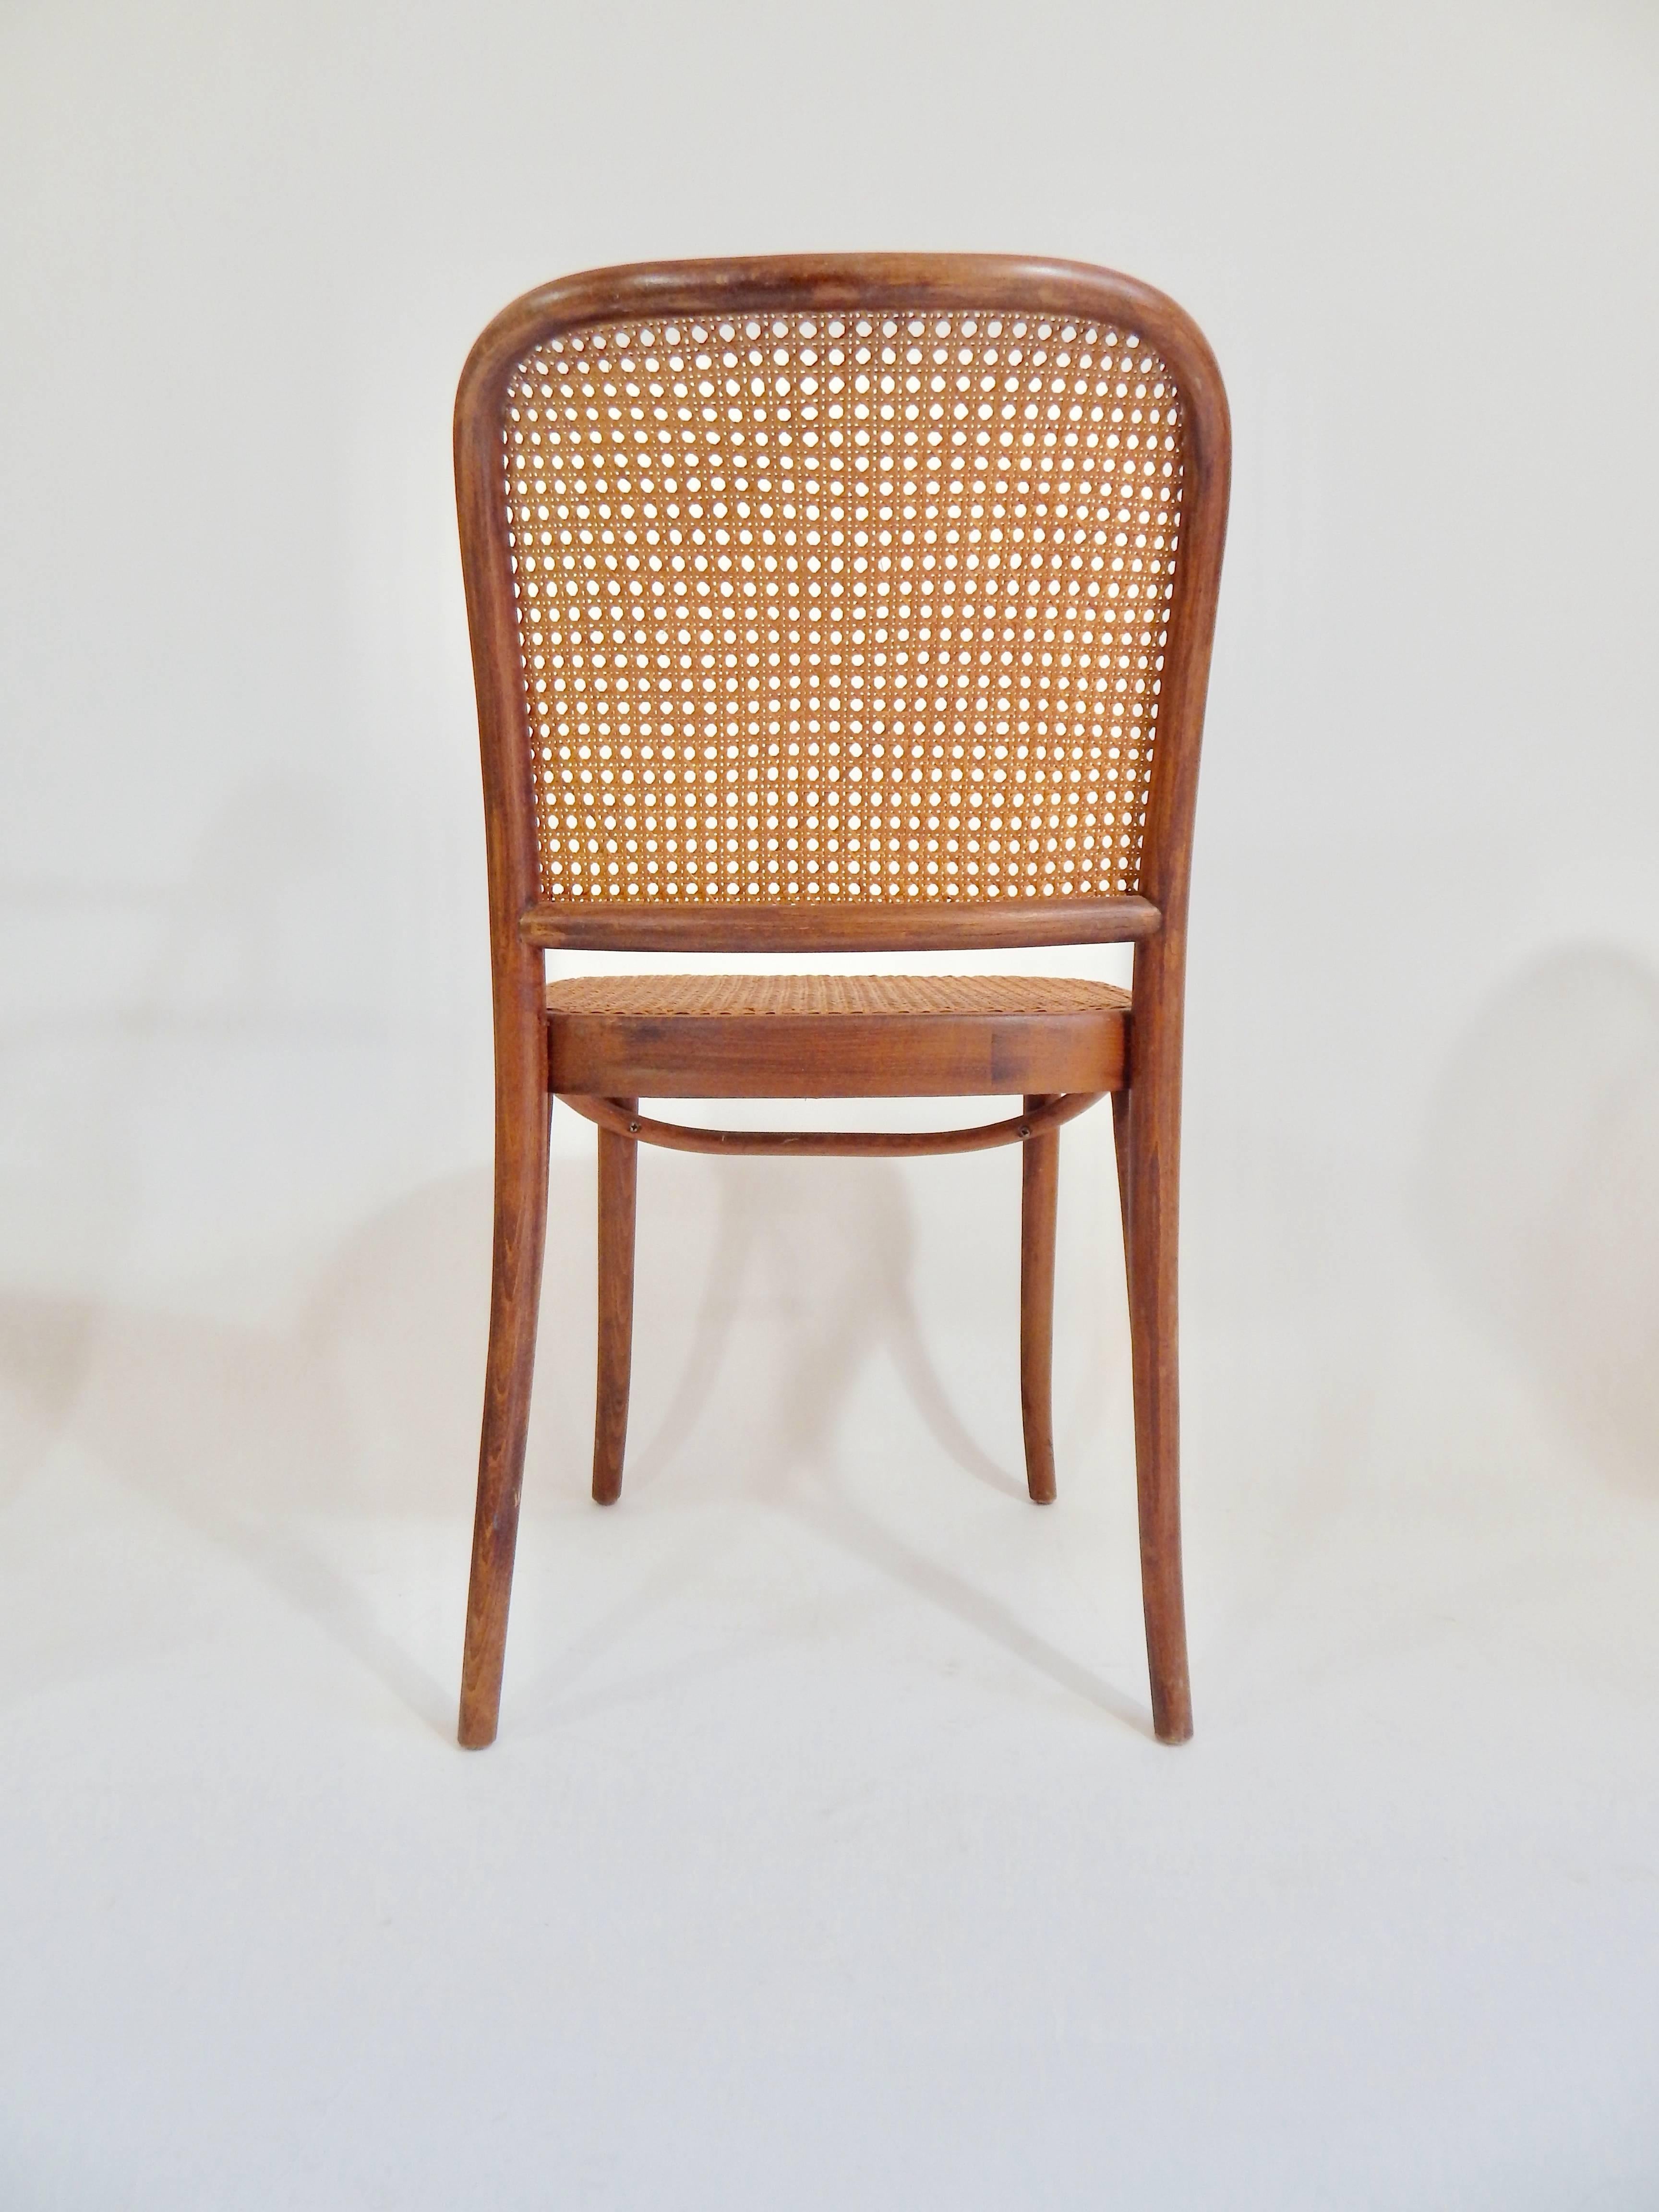 Polish Original 1920s Josef Hoffmann Thonet Bentwood Cane Chairs, Poland